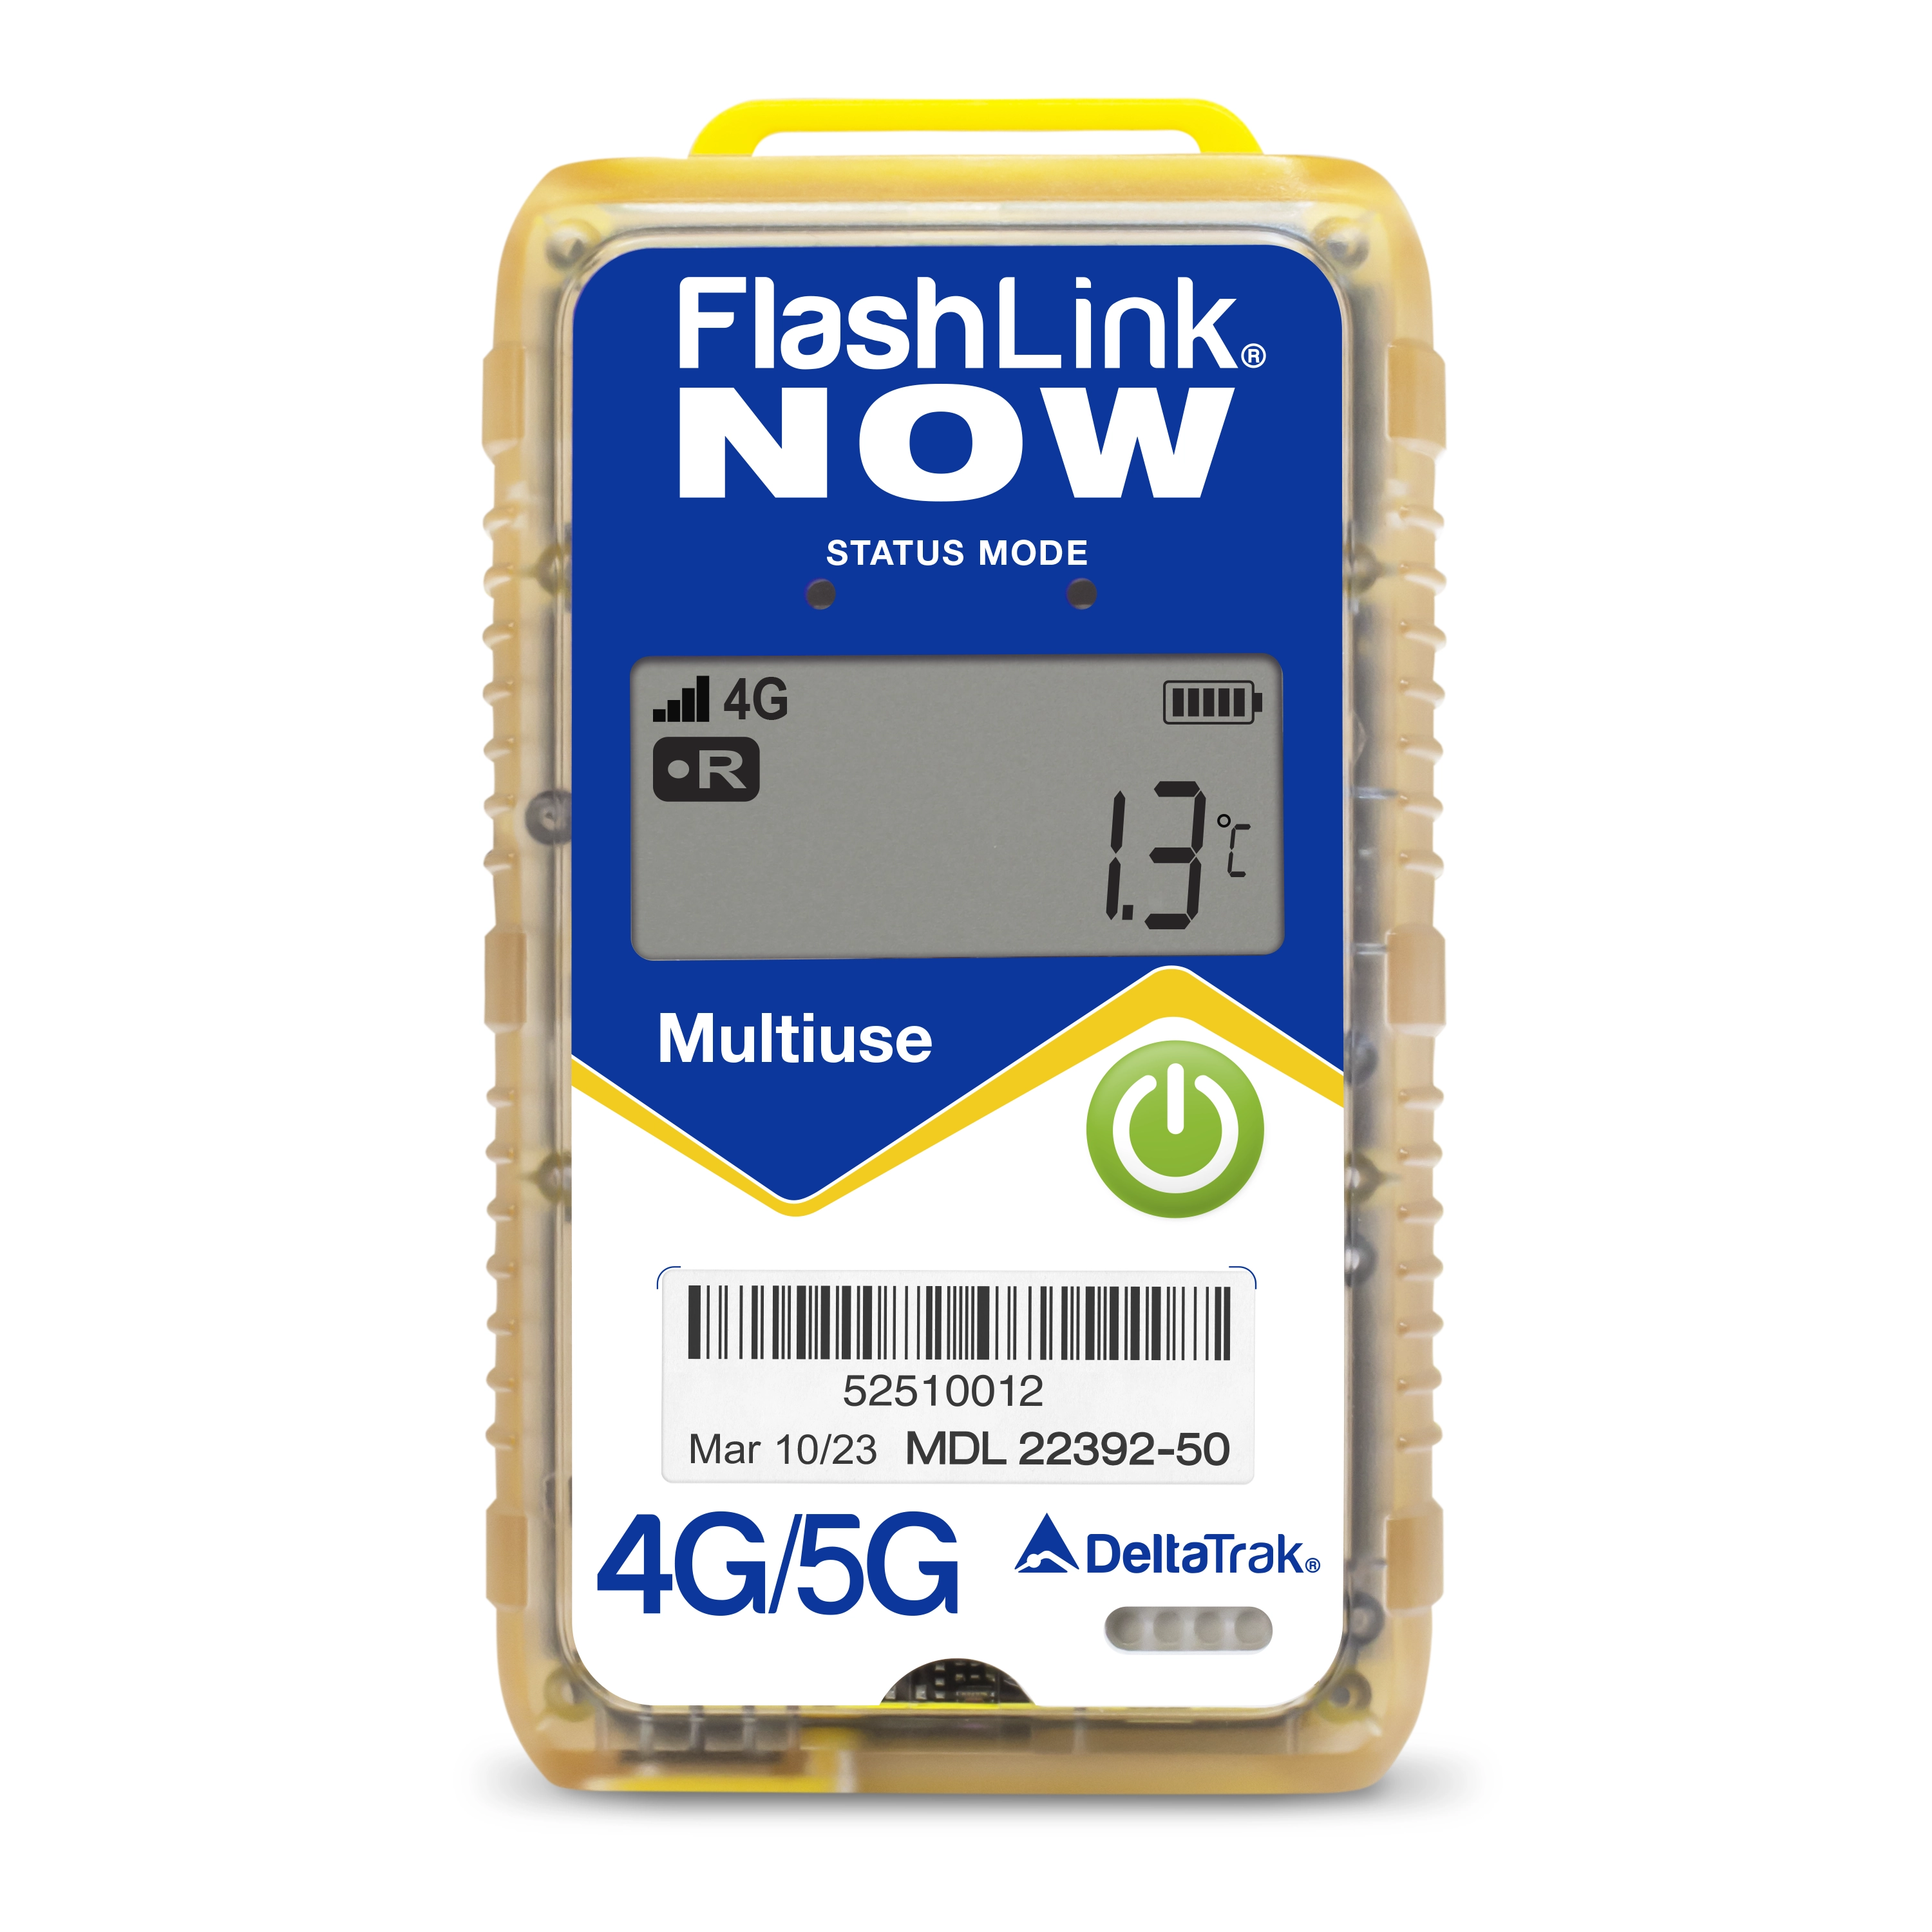 FlashLink® NOW 4G/5G Real-Time Multiuse Logger, Model 22392-50